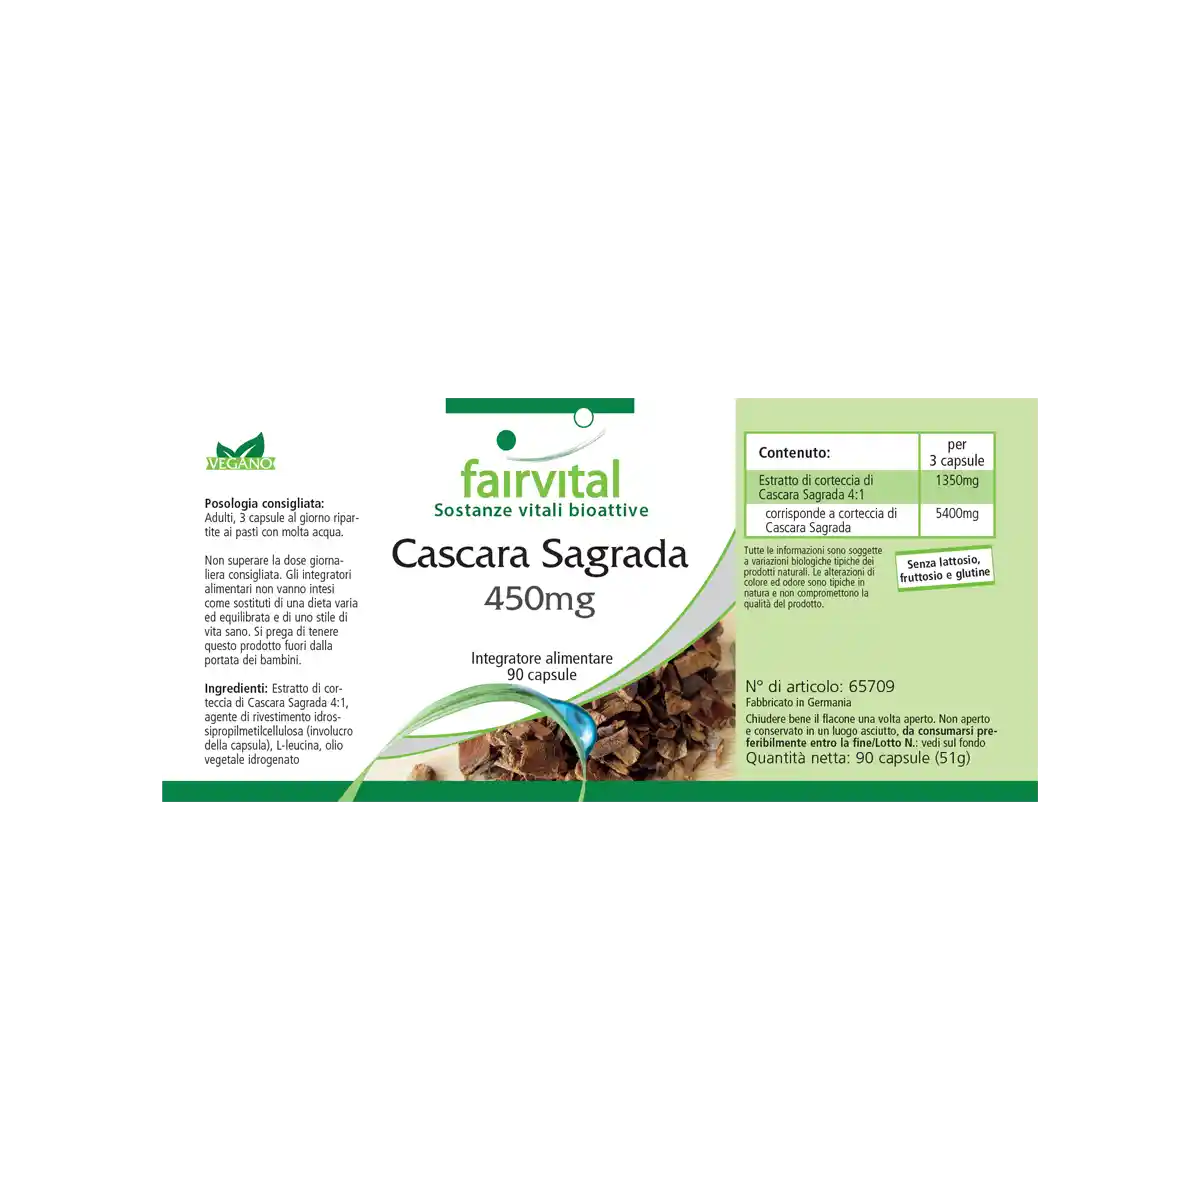 Cascara Sagrada 450mg - 90 capsules